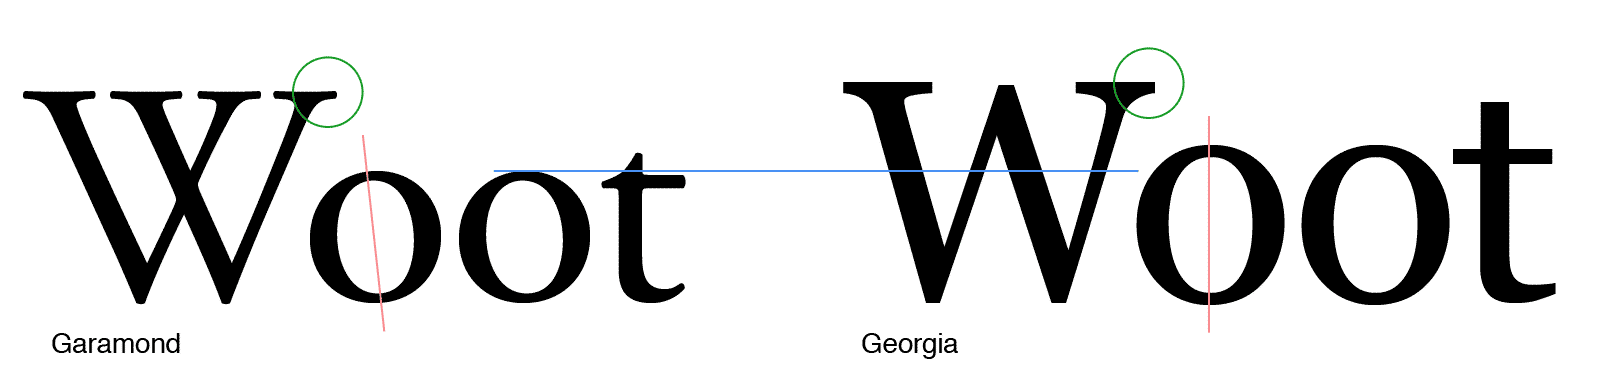 georgia-vs-garamond